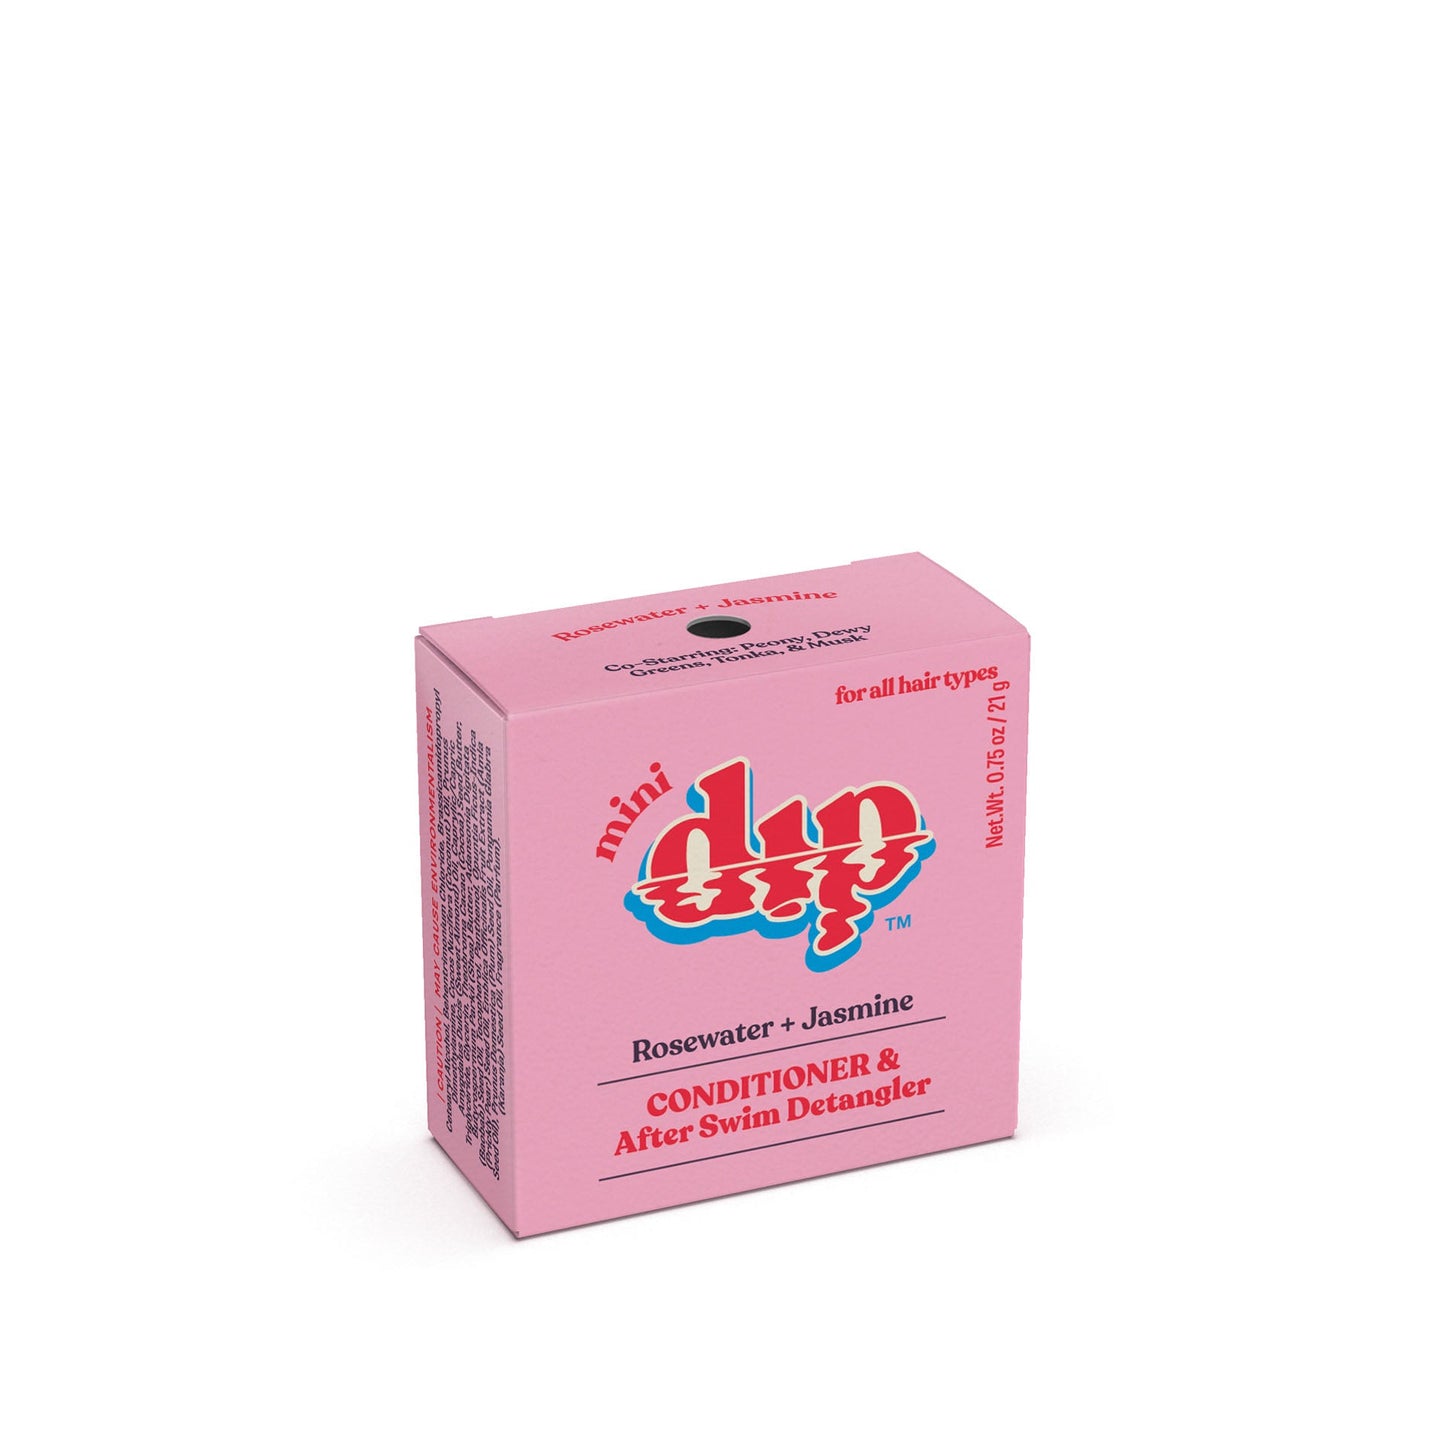 Mini Dip Shampoo Bar